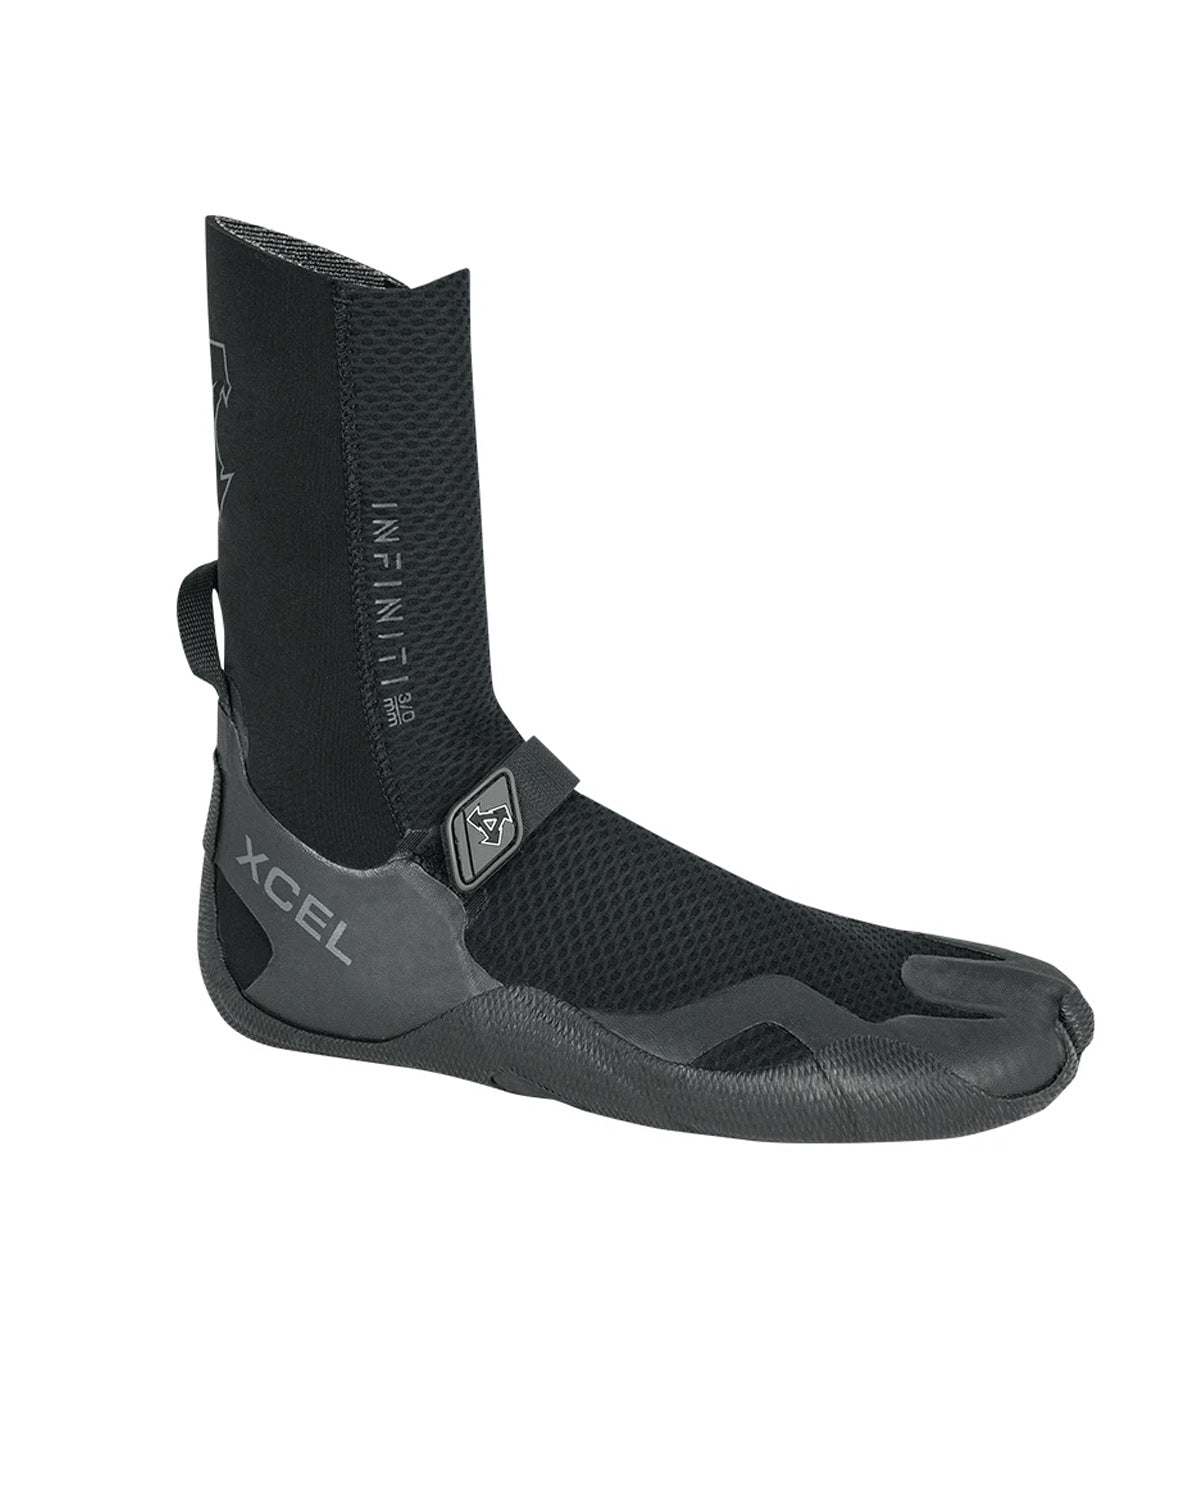 5mm XCEL INFINITI Round Toe Wetsuit Boots